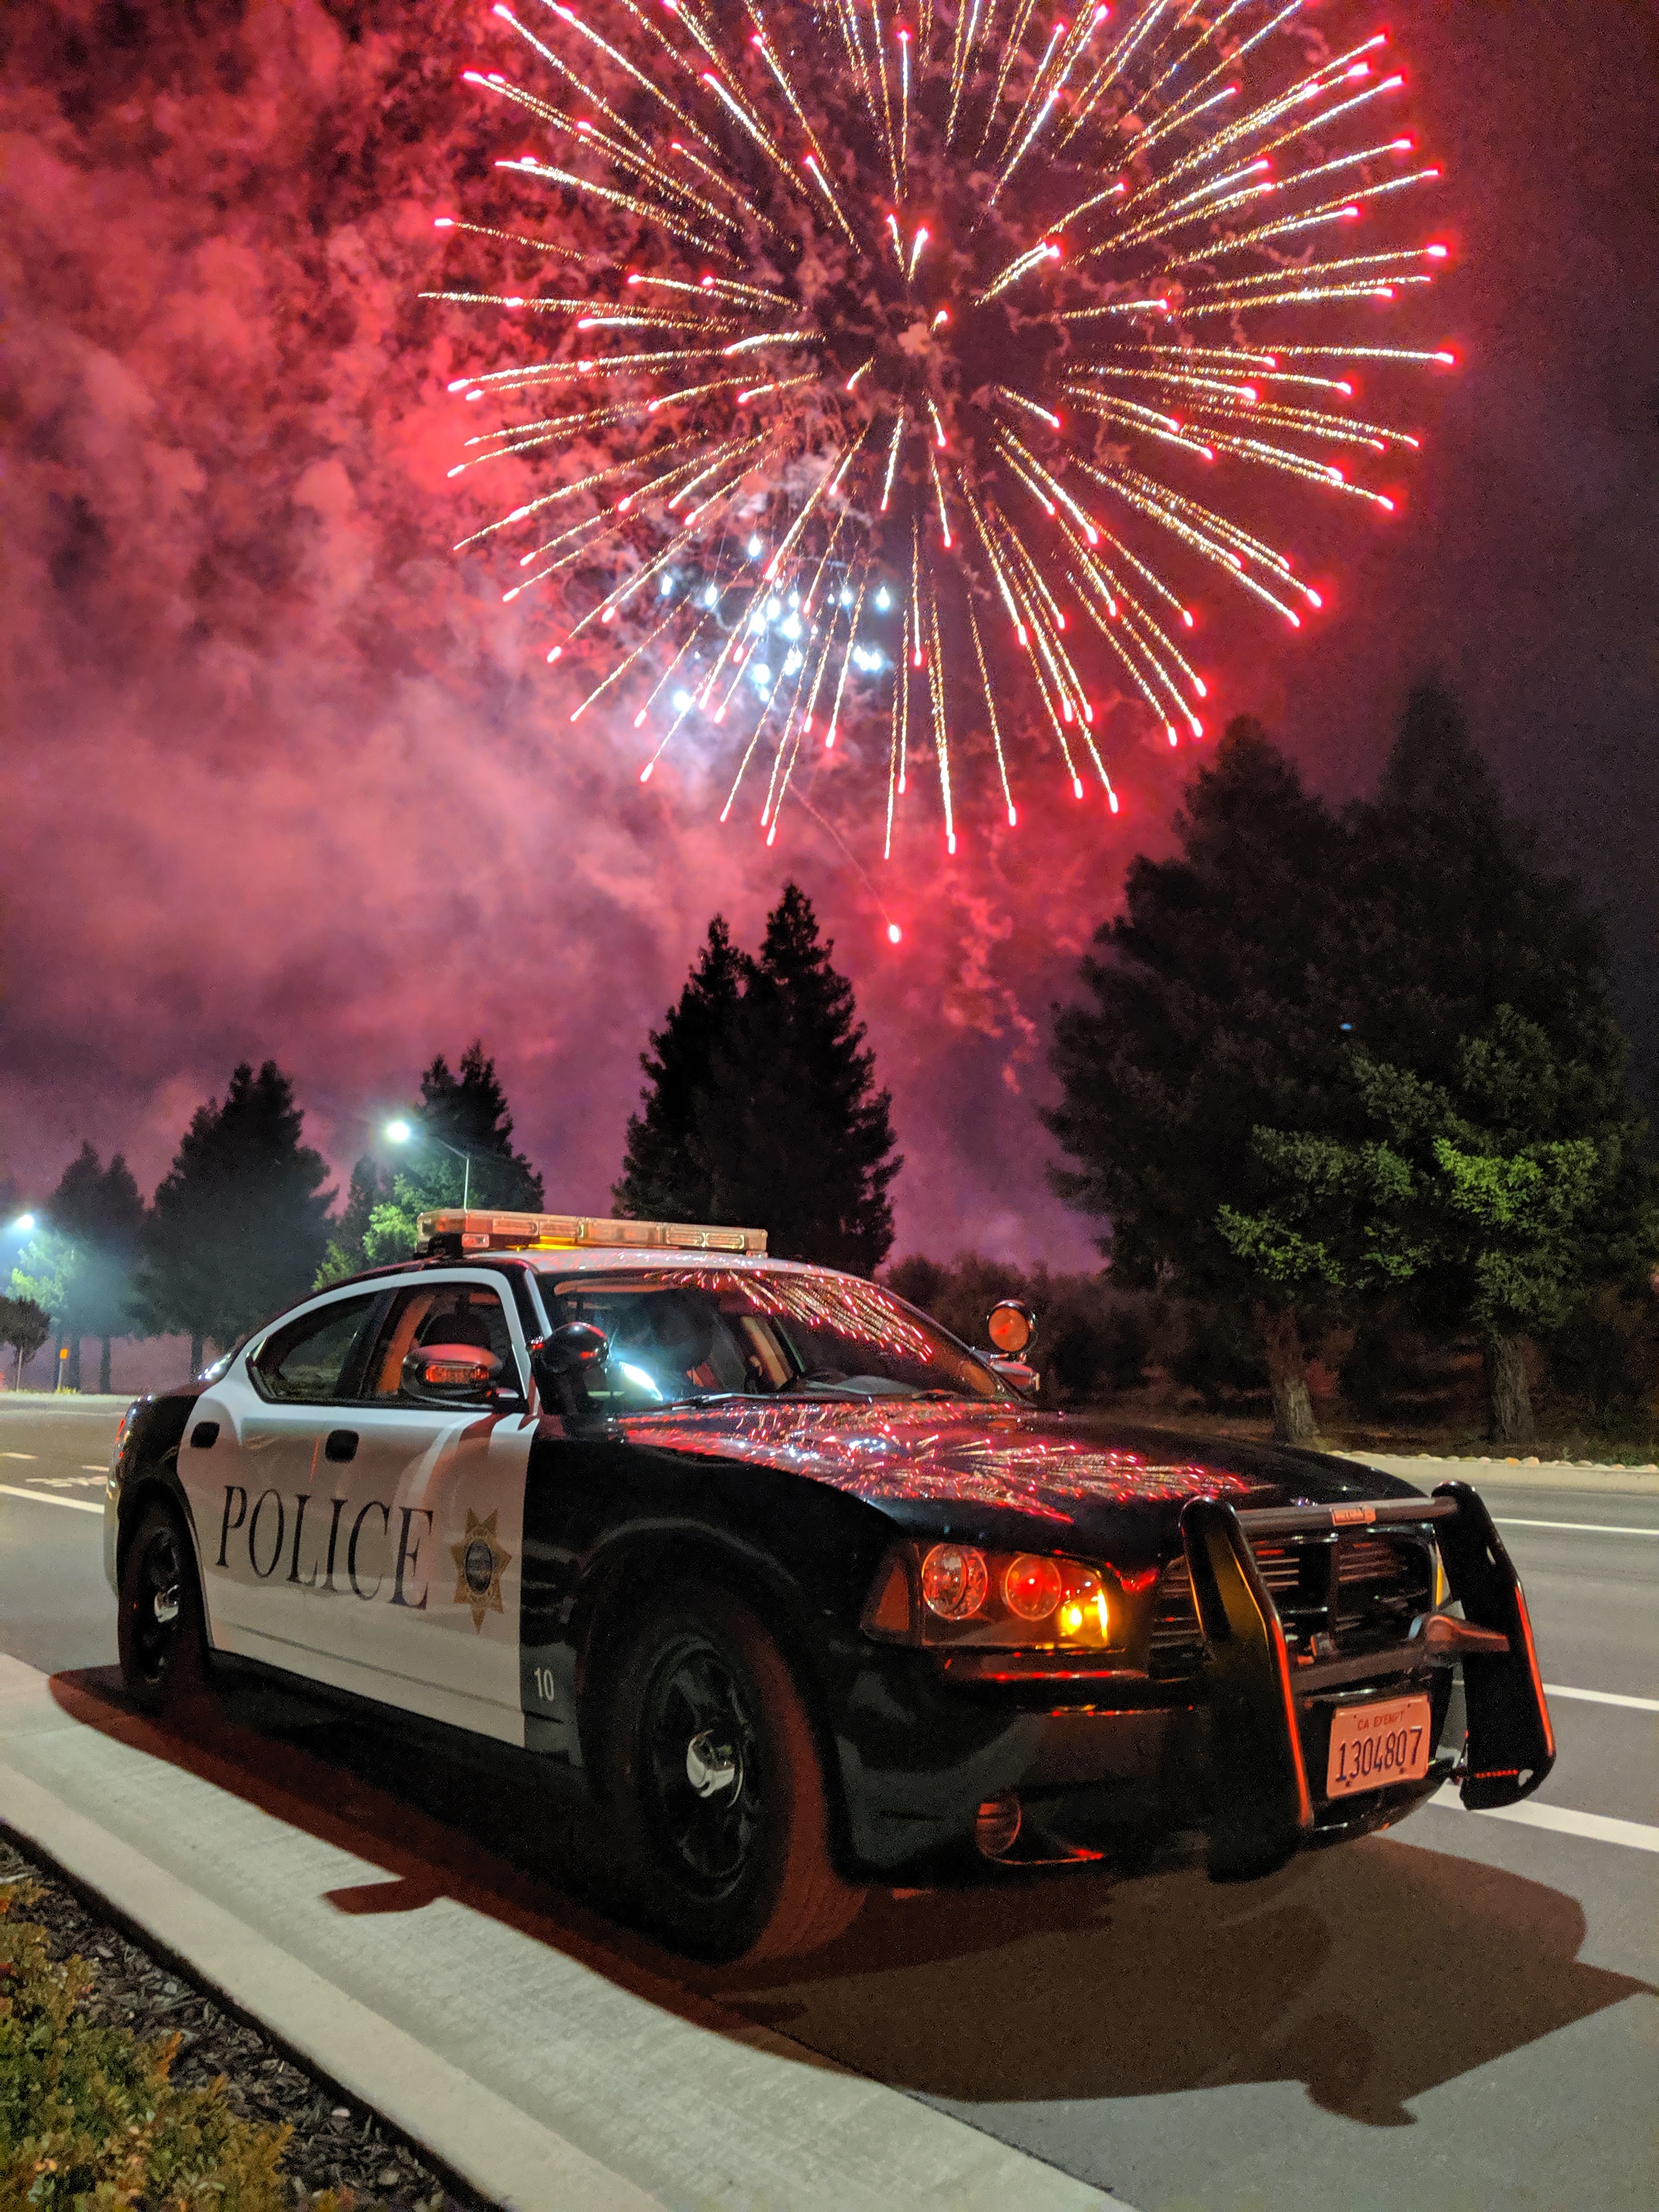 firework over police car